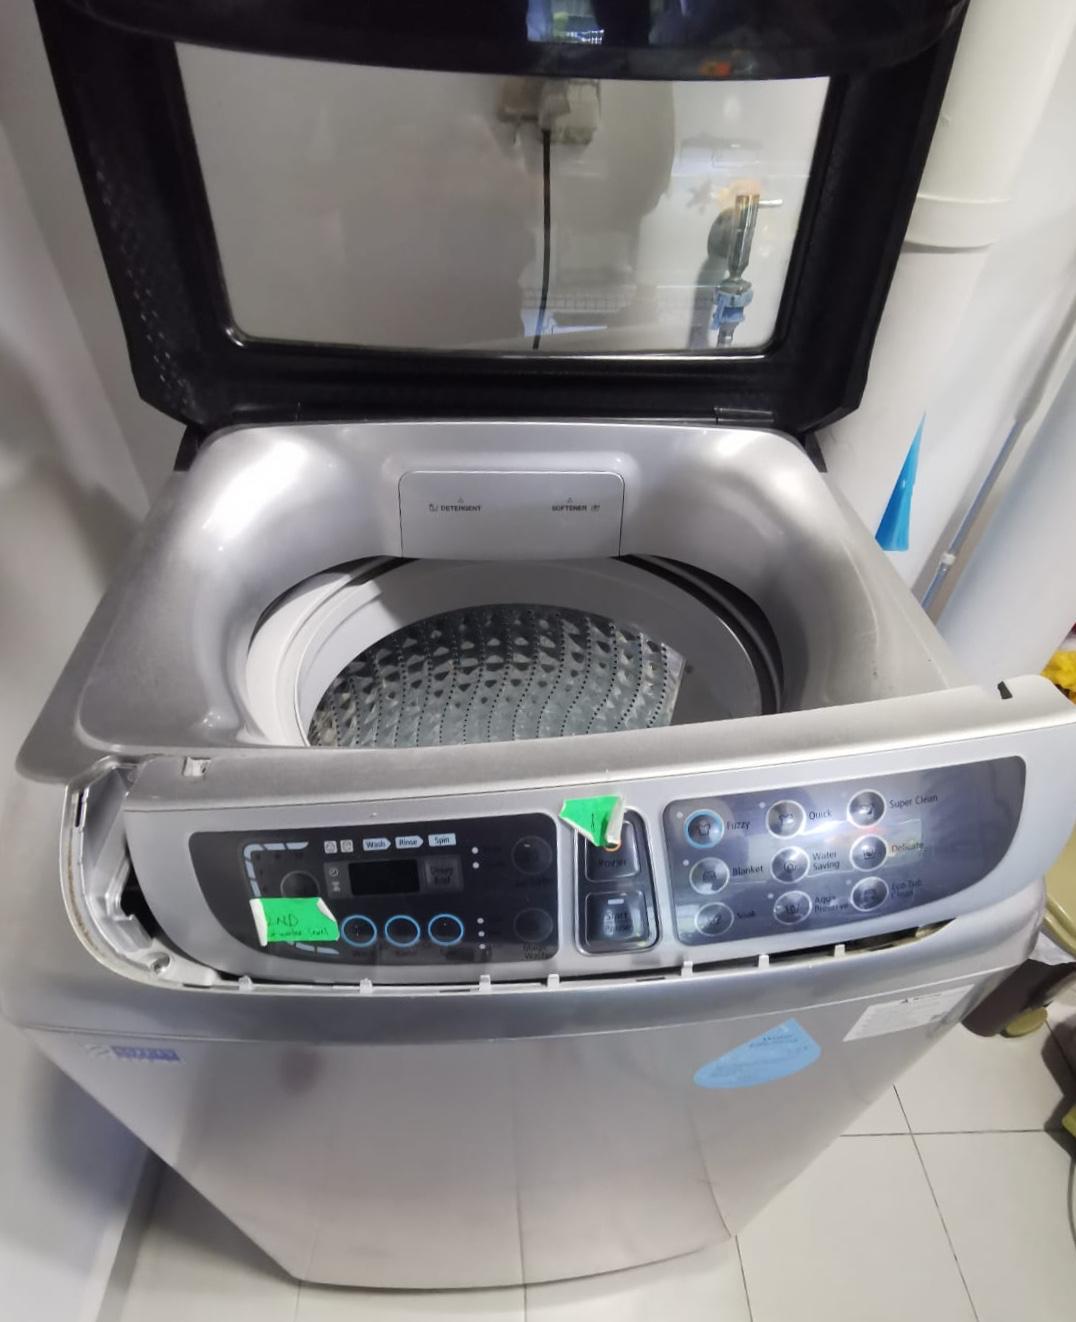 Washing Machine Checking